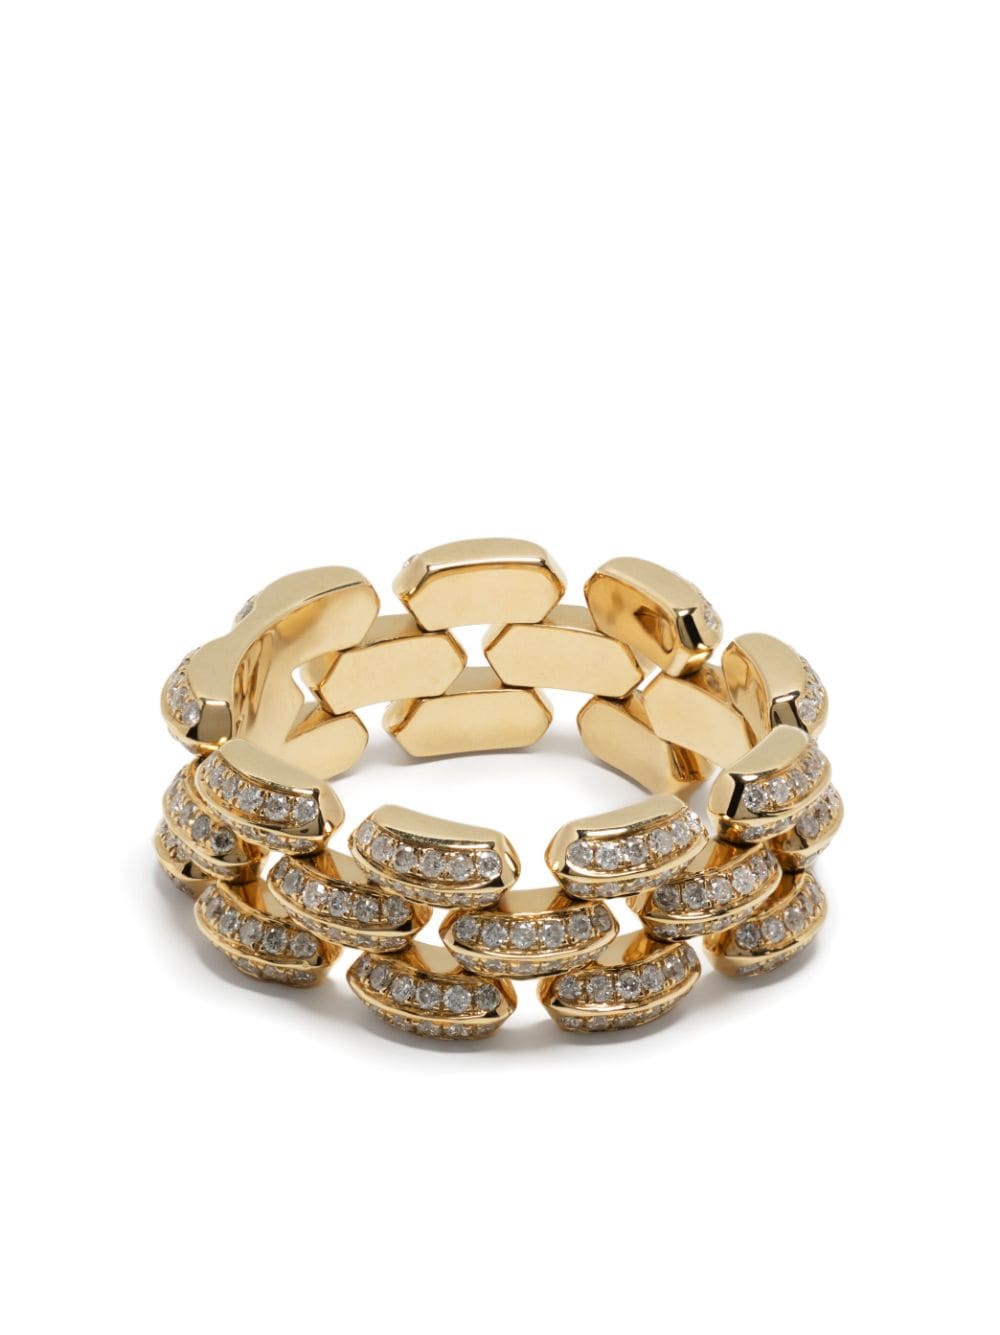 Lizzie Mandler Fine Jewelry 18kt Yellow Gold Knife Edge Emerald Signet Ring